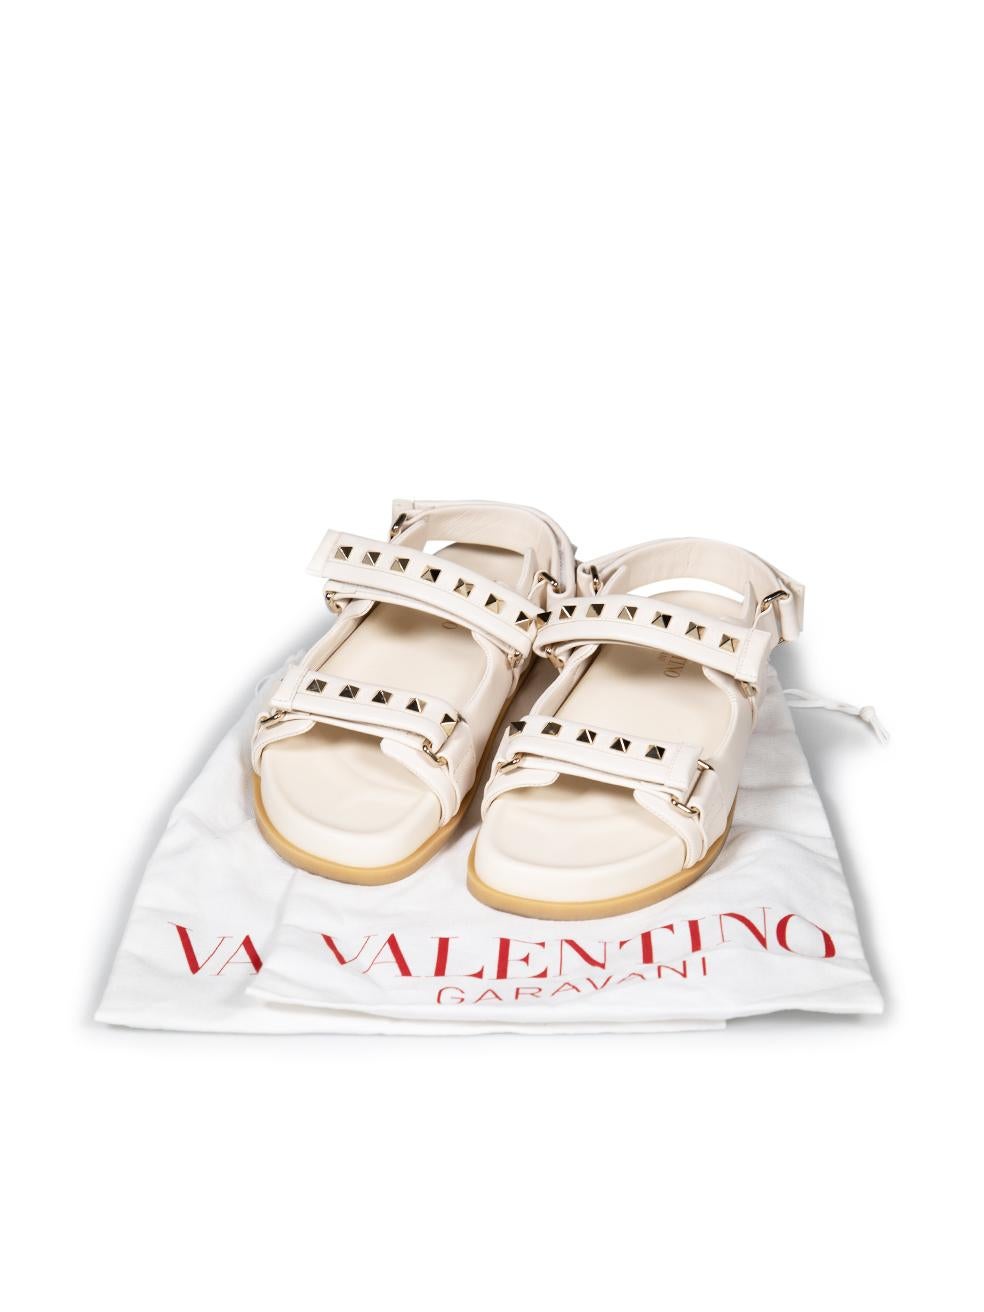 Valentino Garavani Cream Leather Rockstud Flat Sandals Size IT 37 For Sale 4